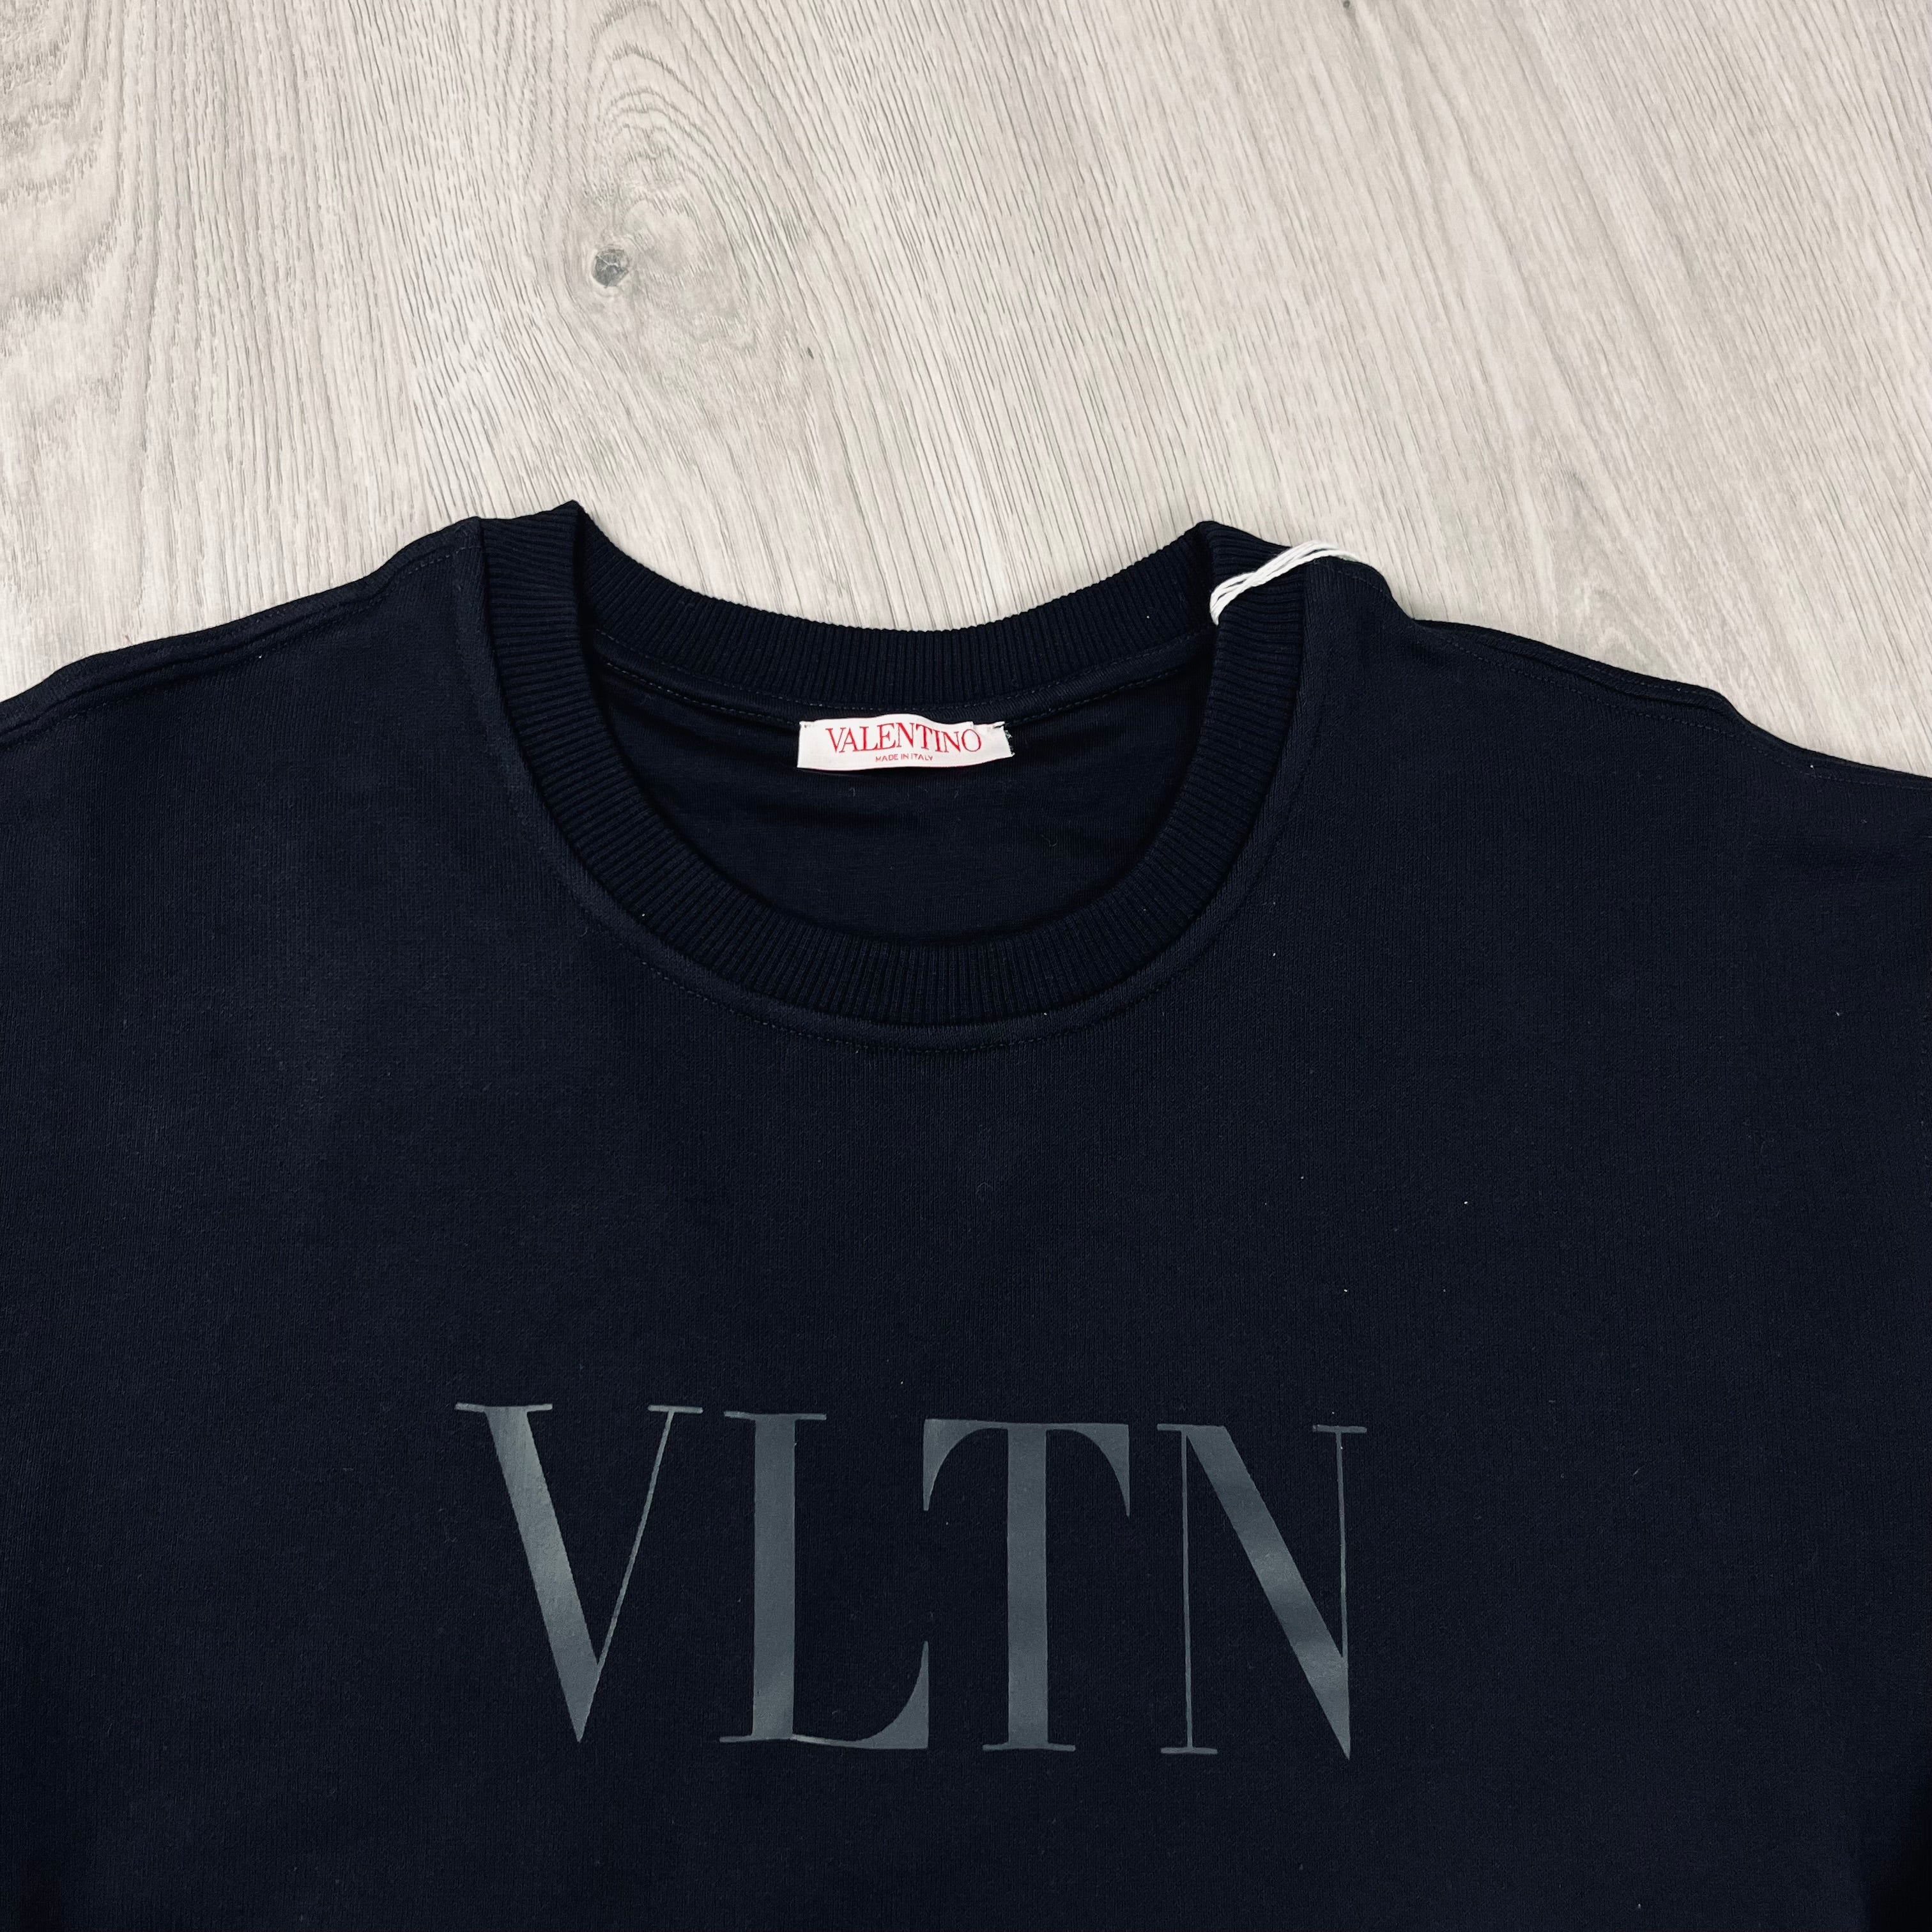 Valentino Printed Sweatshirt